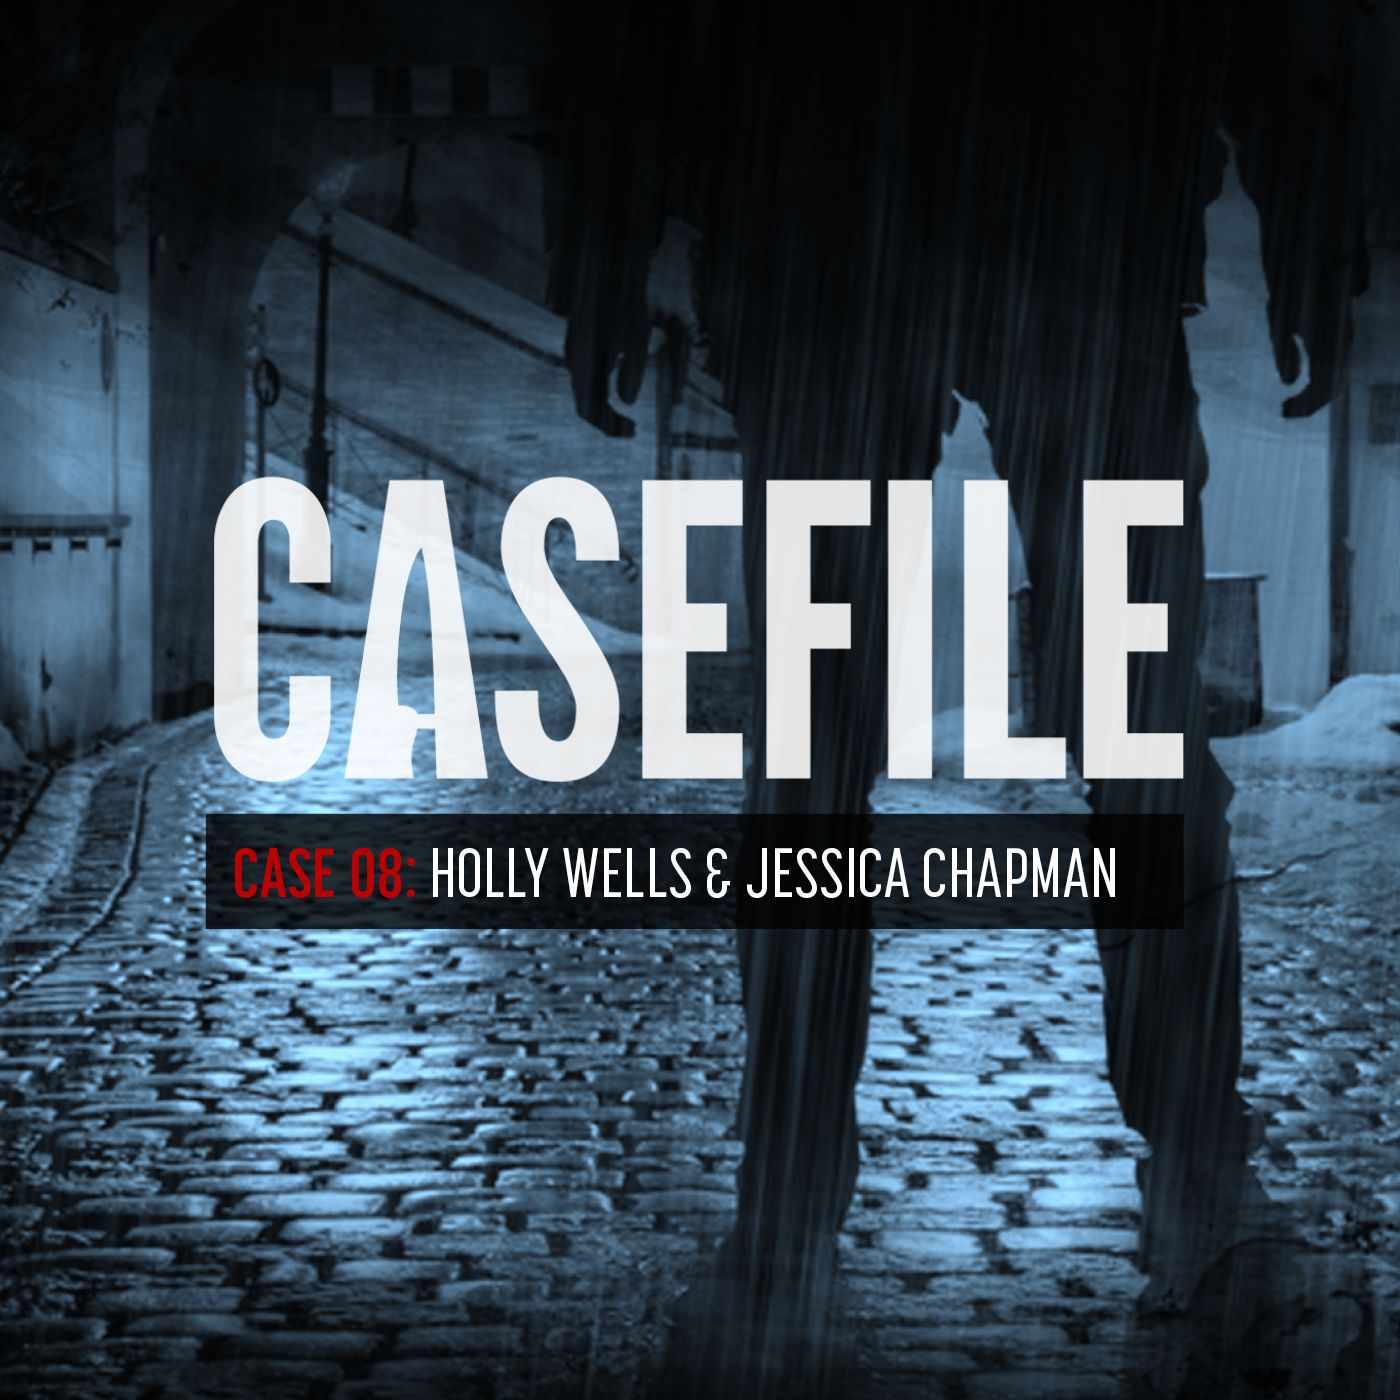 Case 08: Holly Wells & Jessica Chapman